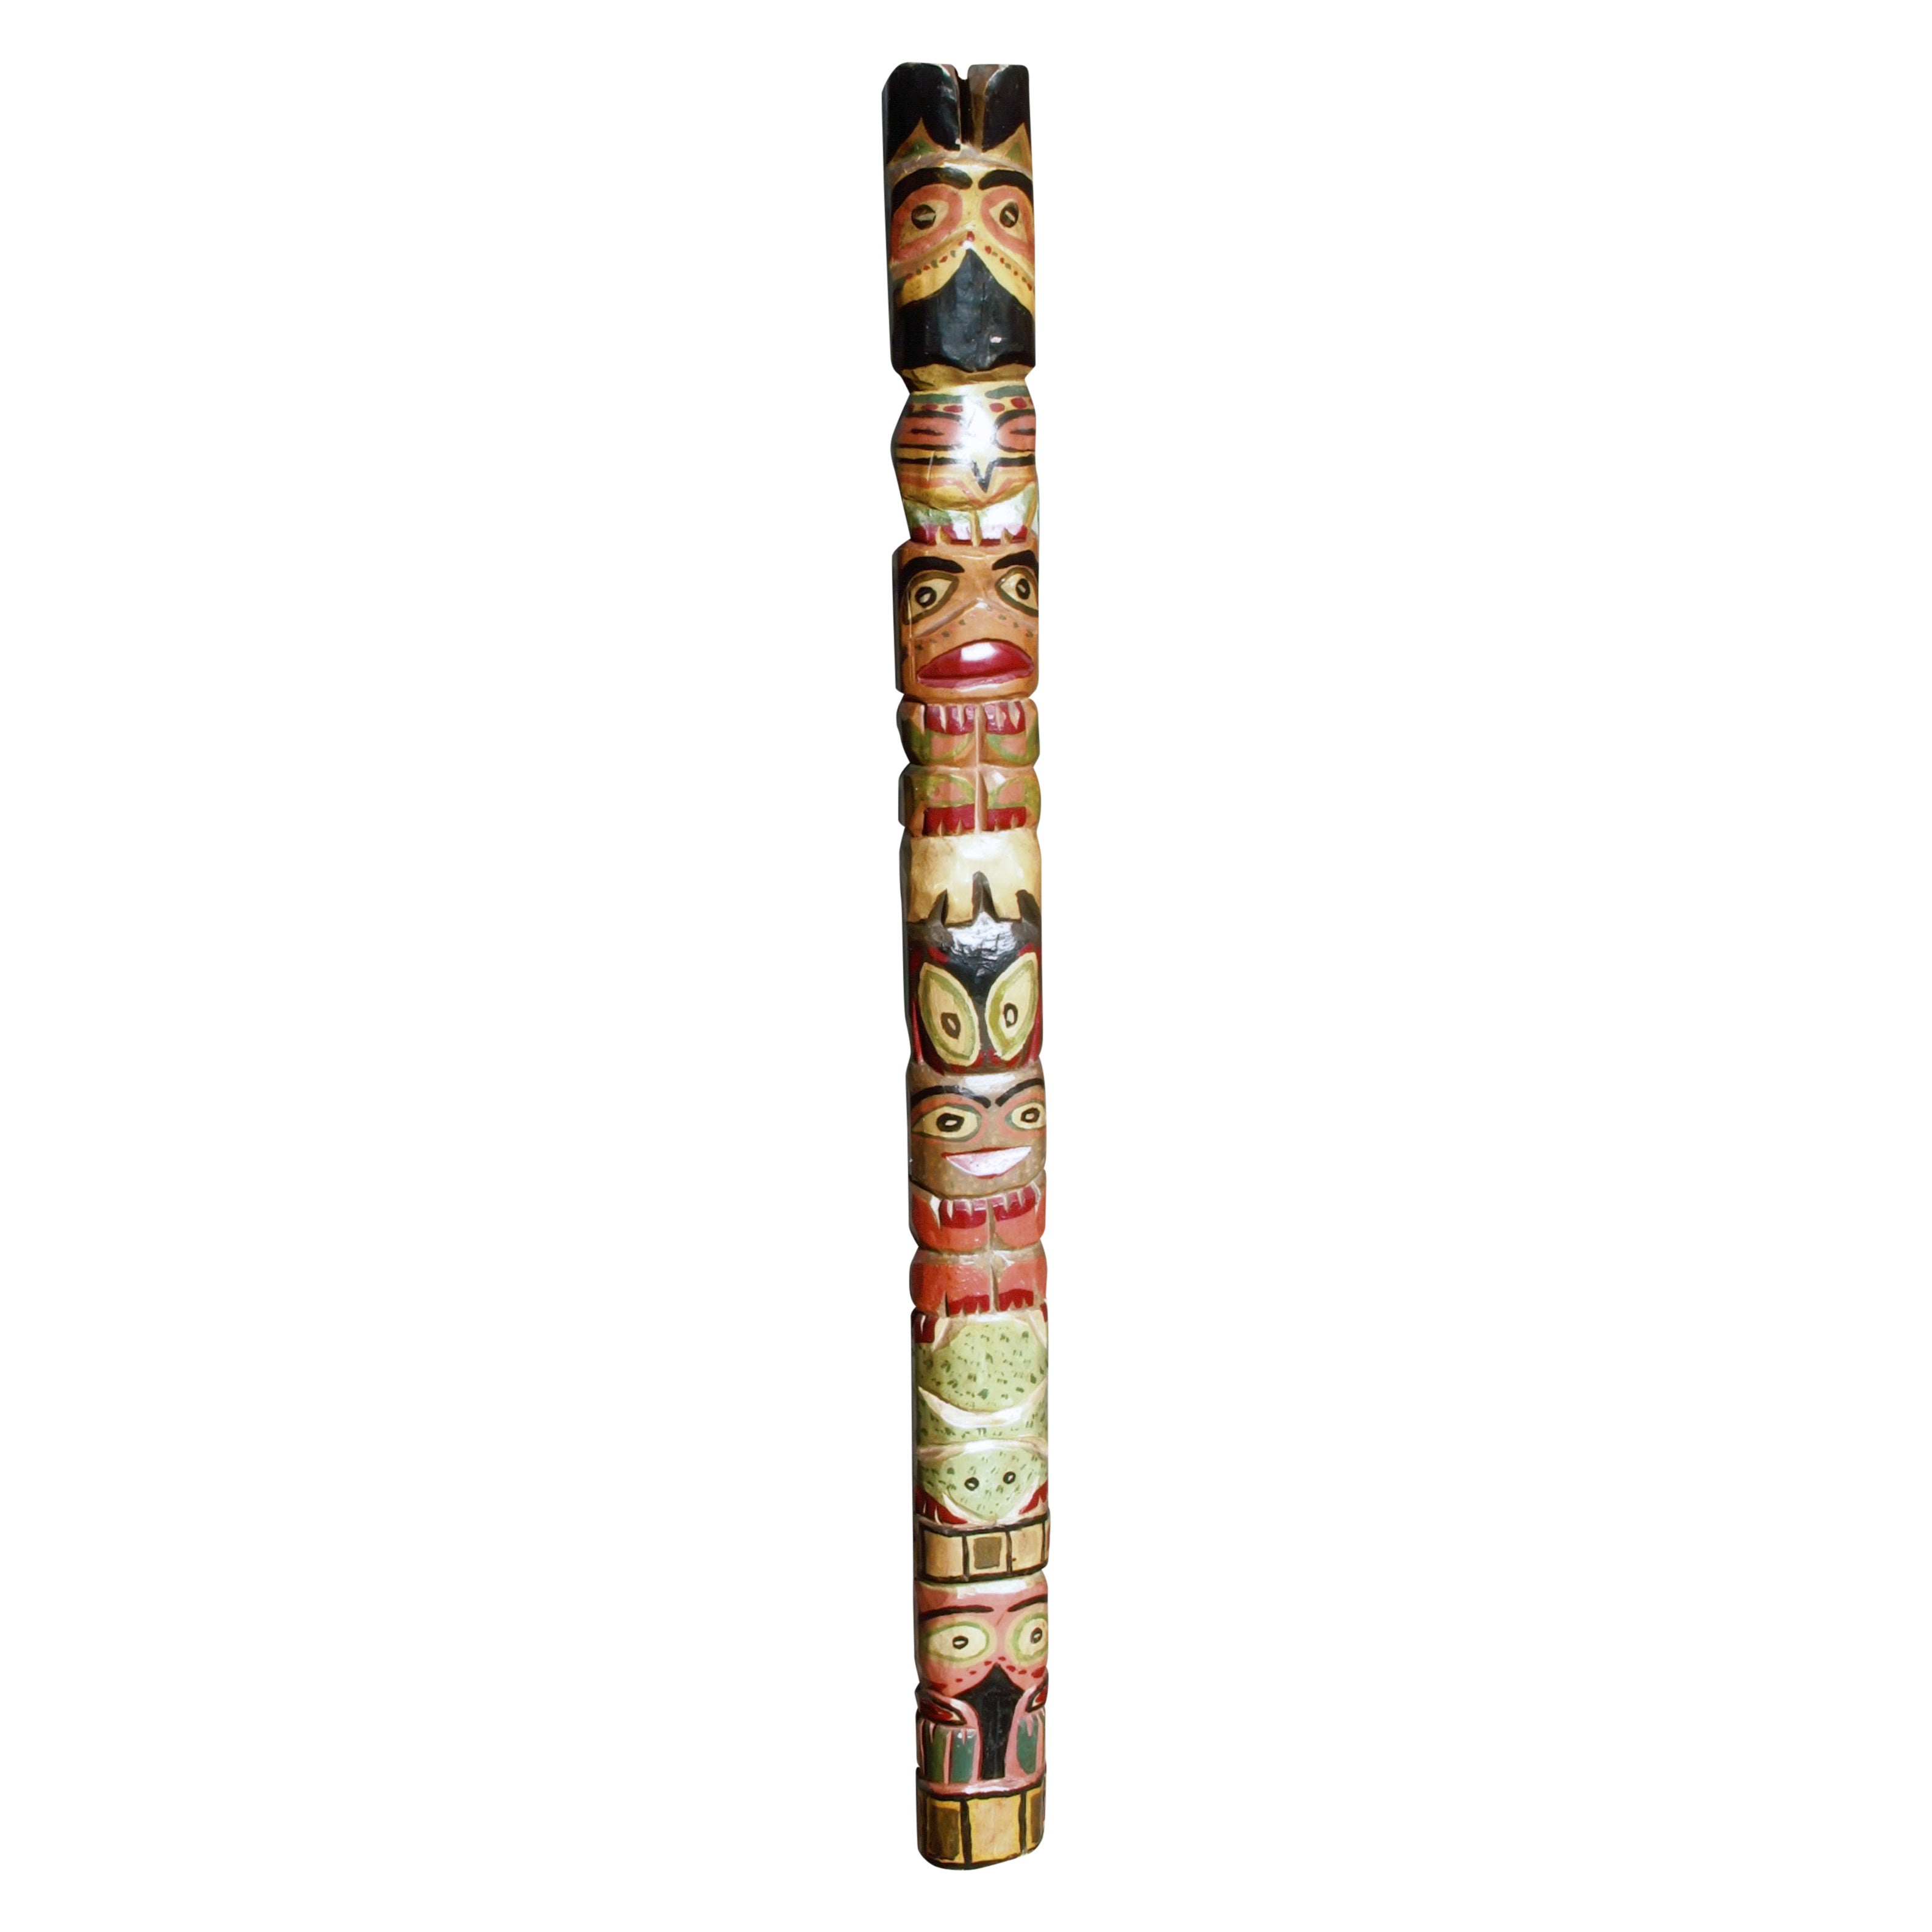 Muckleshoot Coast Salish Model Totem by “Chief” White Eagle, Native, Carving, Totem Pole